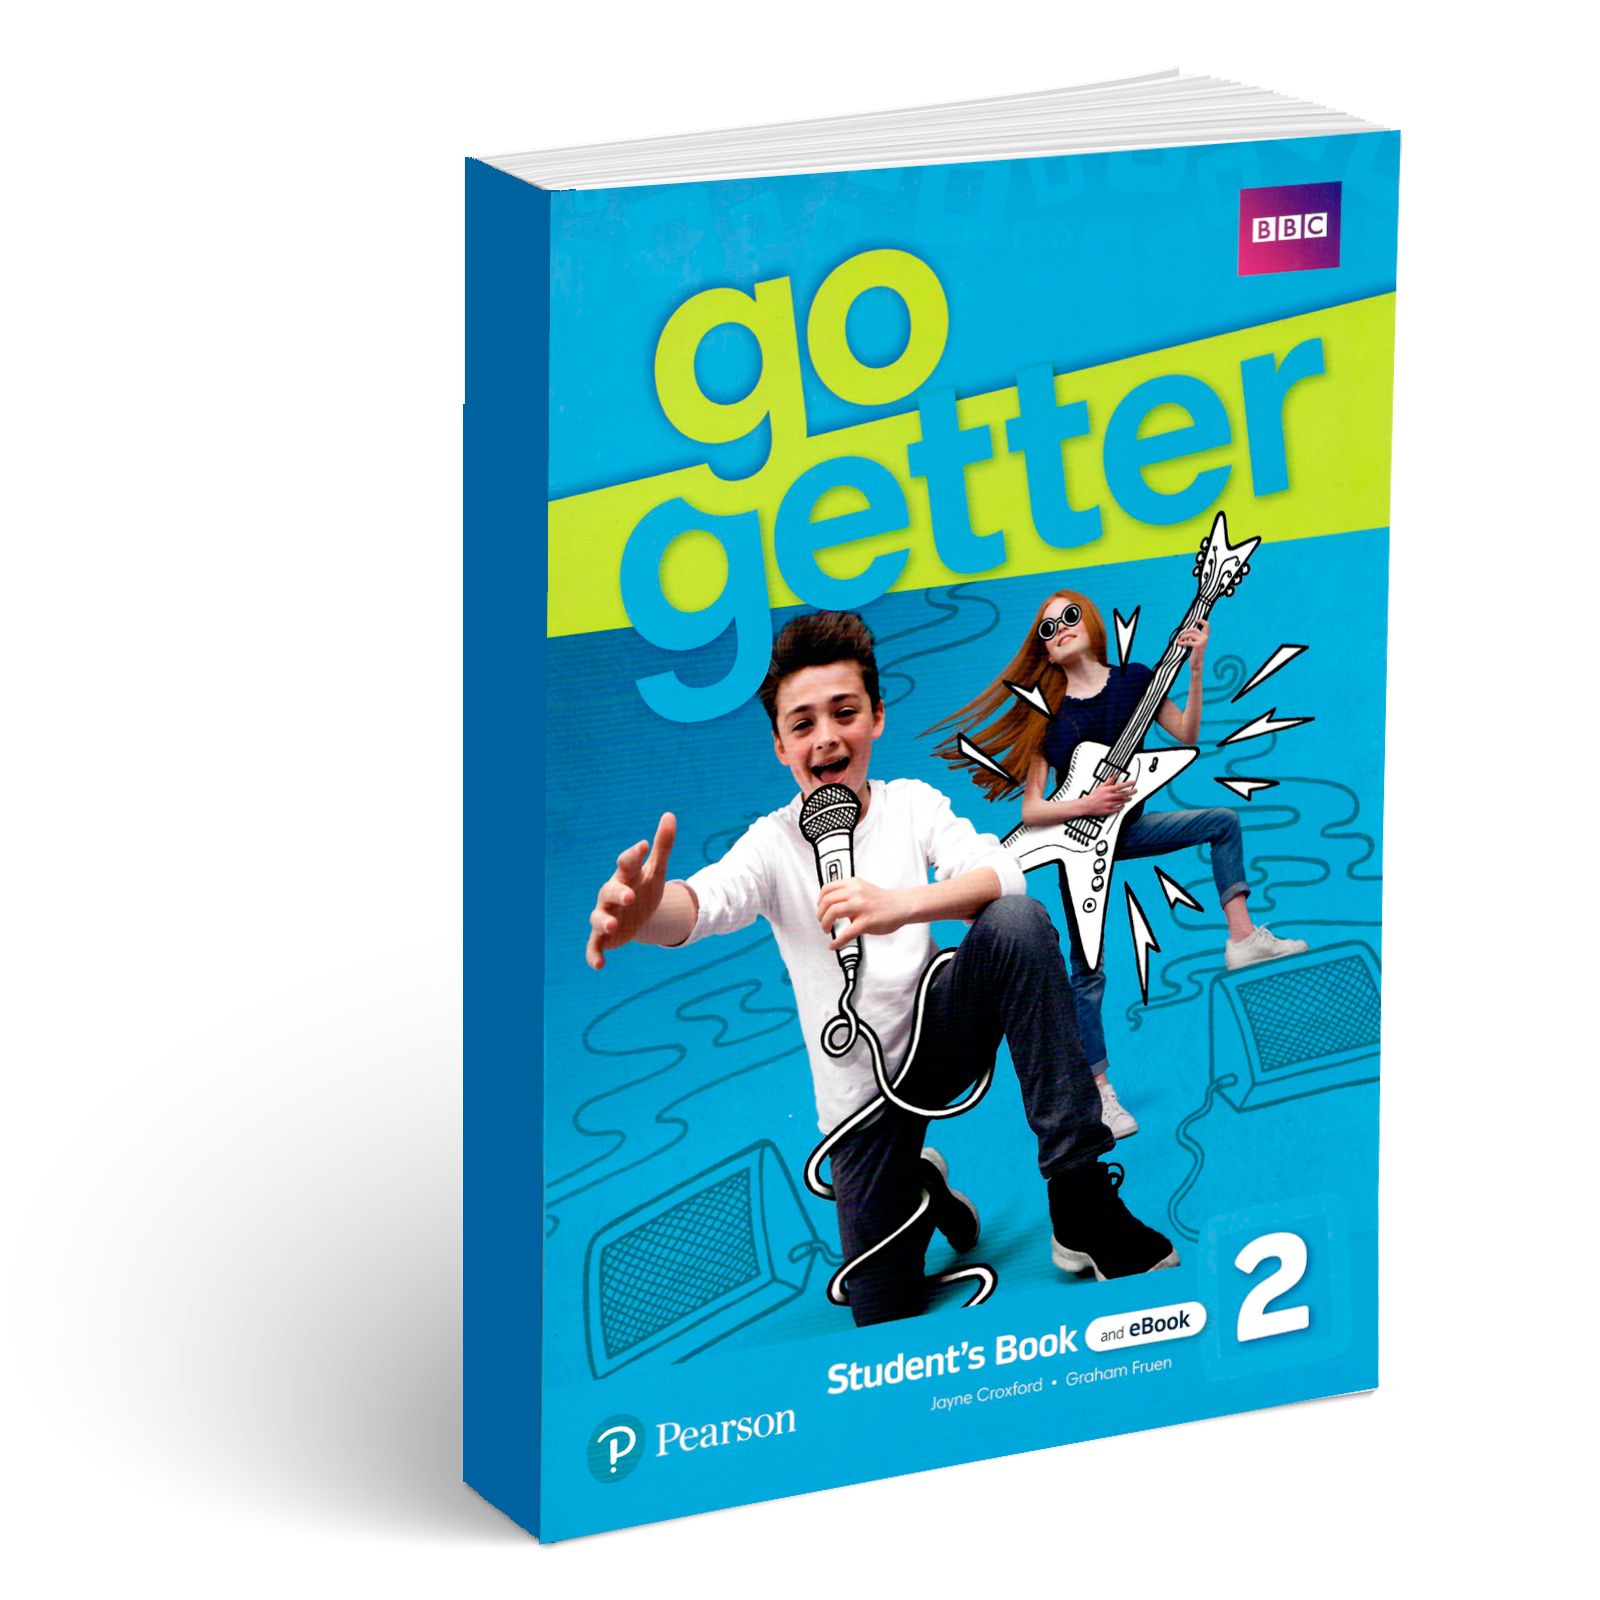 Go getter 1 unit 6. Go Getter 2 student's book. Учебник go Getter 2. Рабочая тетрадь go Getter 2.